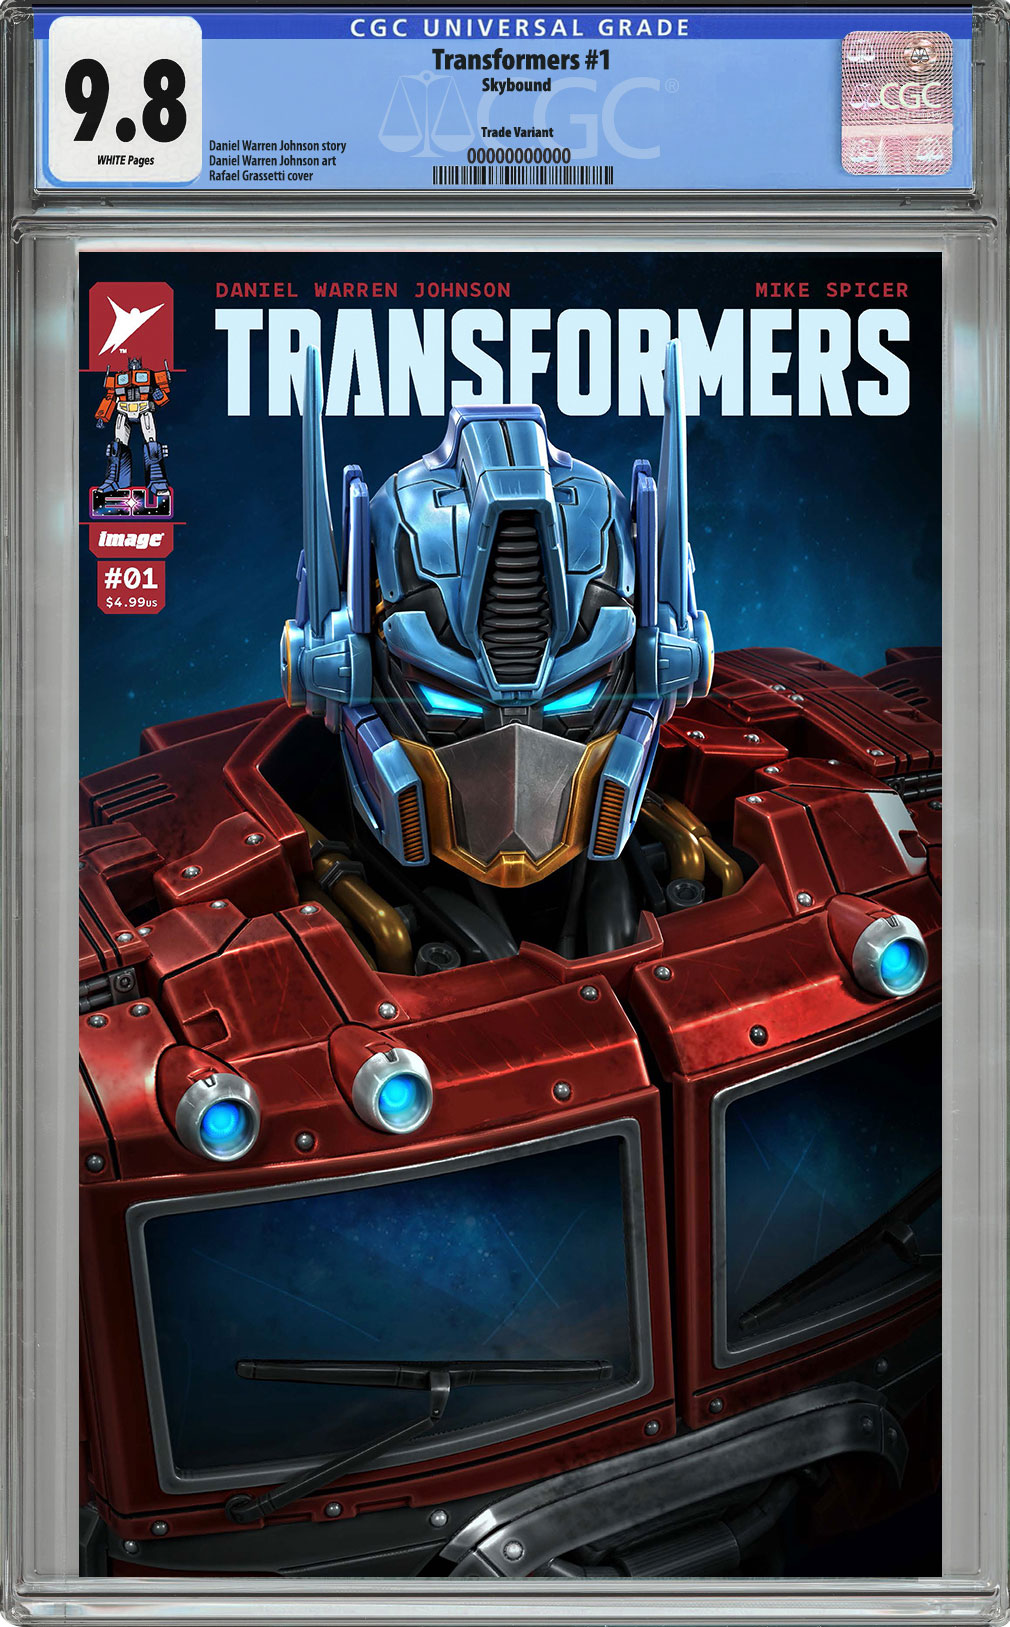 CGC 9.8 Transformers #1 Trade Dress Edition by Rafael Grassetti